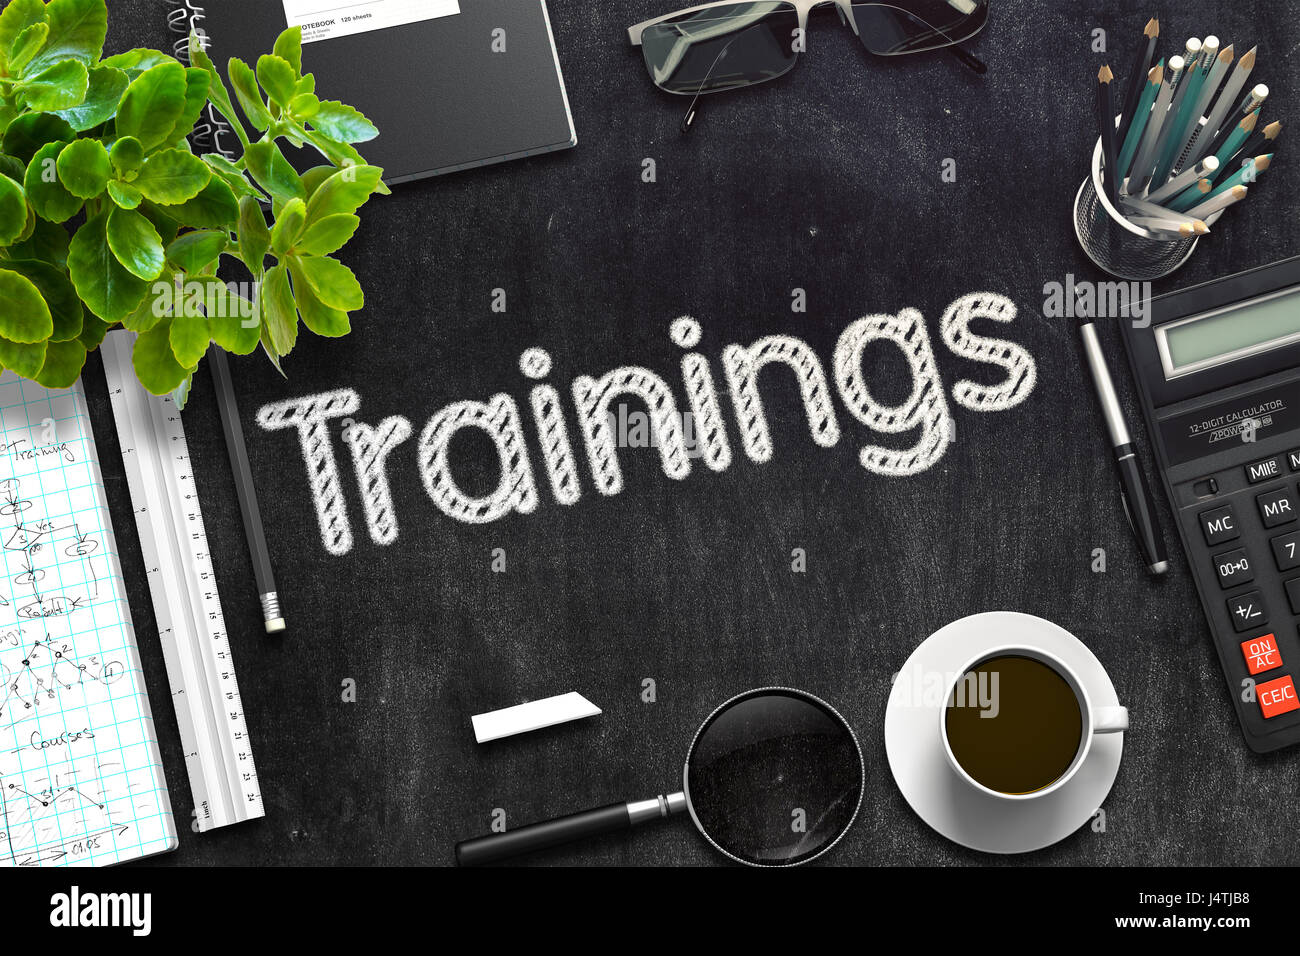 Trainings Concept on Black Chalkboard. 3D Rendering. Stock Photo